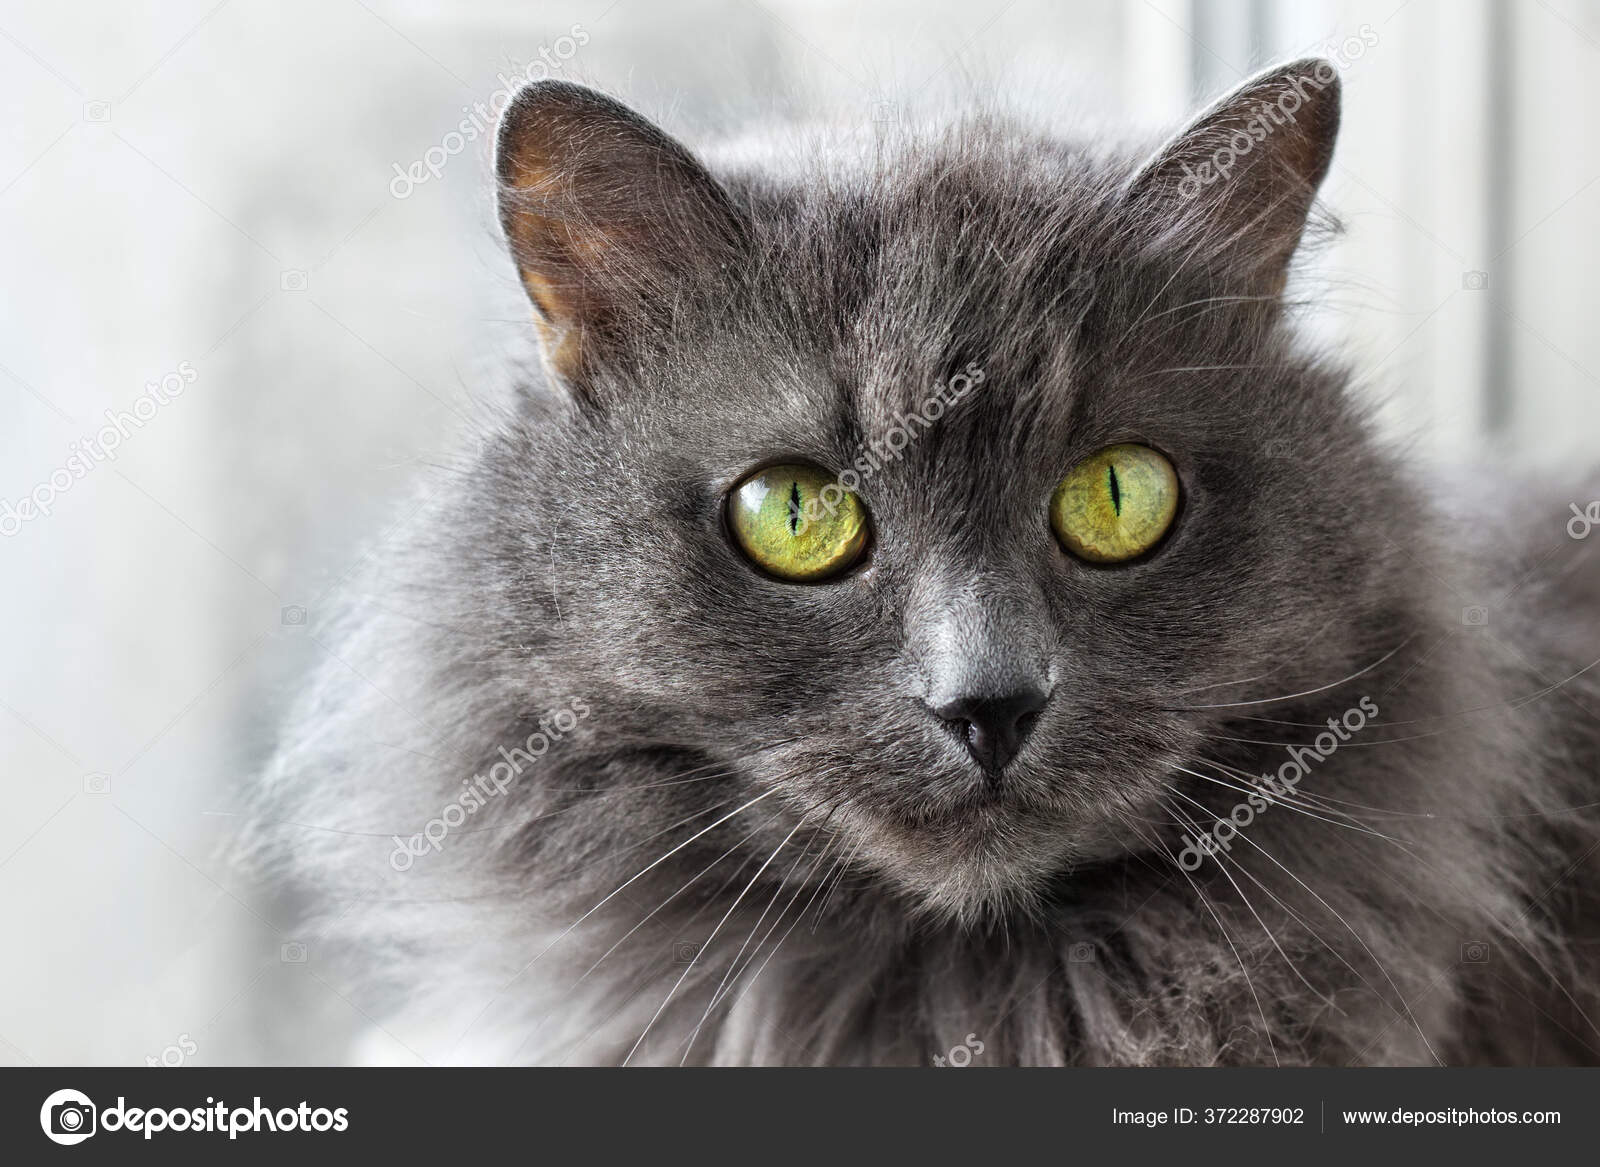 depositphotos 372287902 stock photo beautiful gray nebelung cat sitting